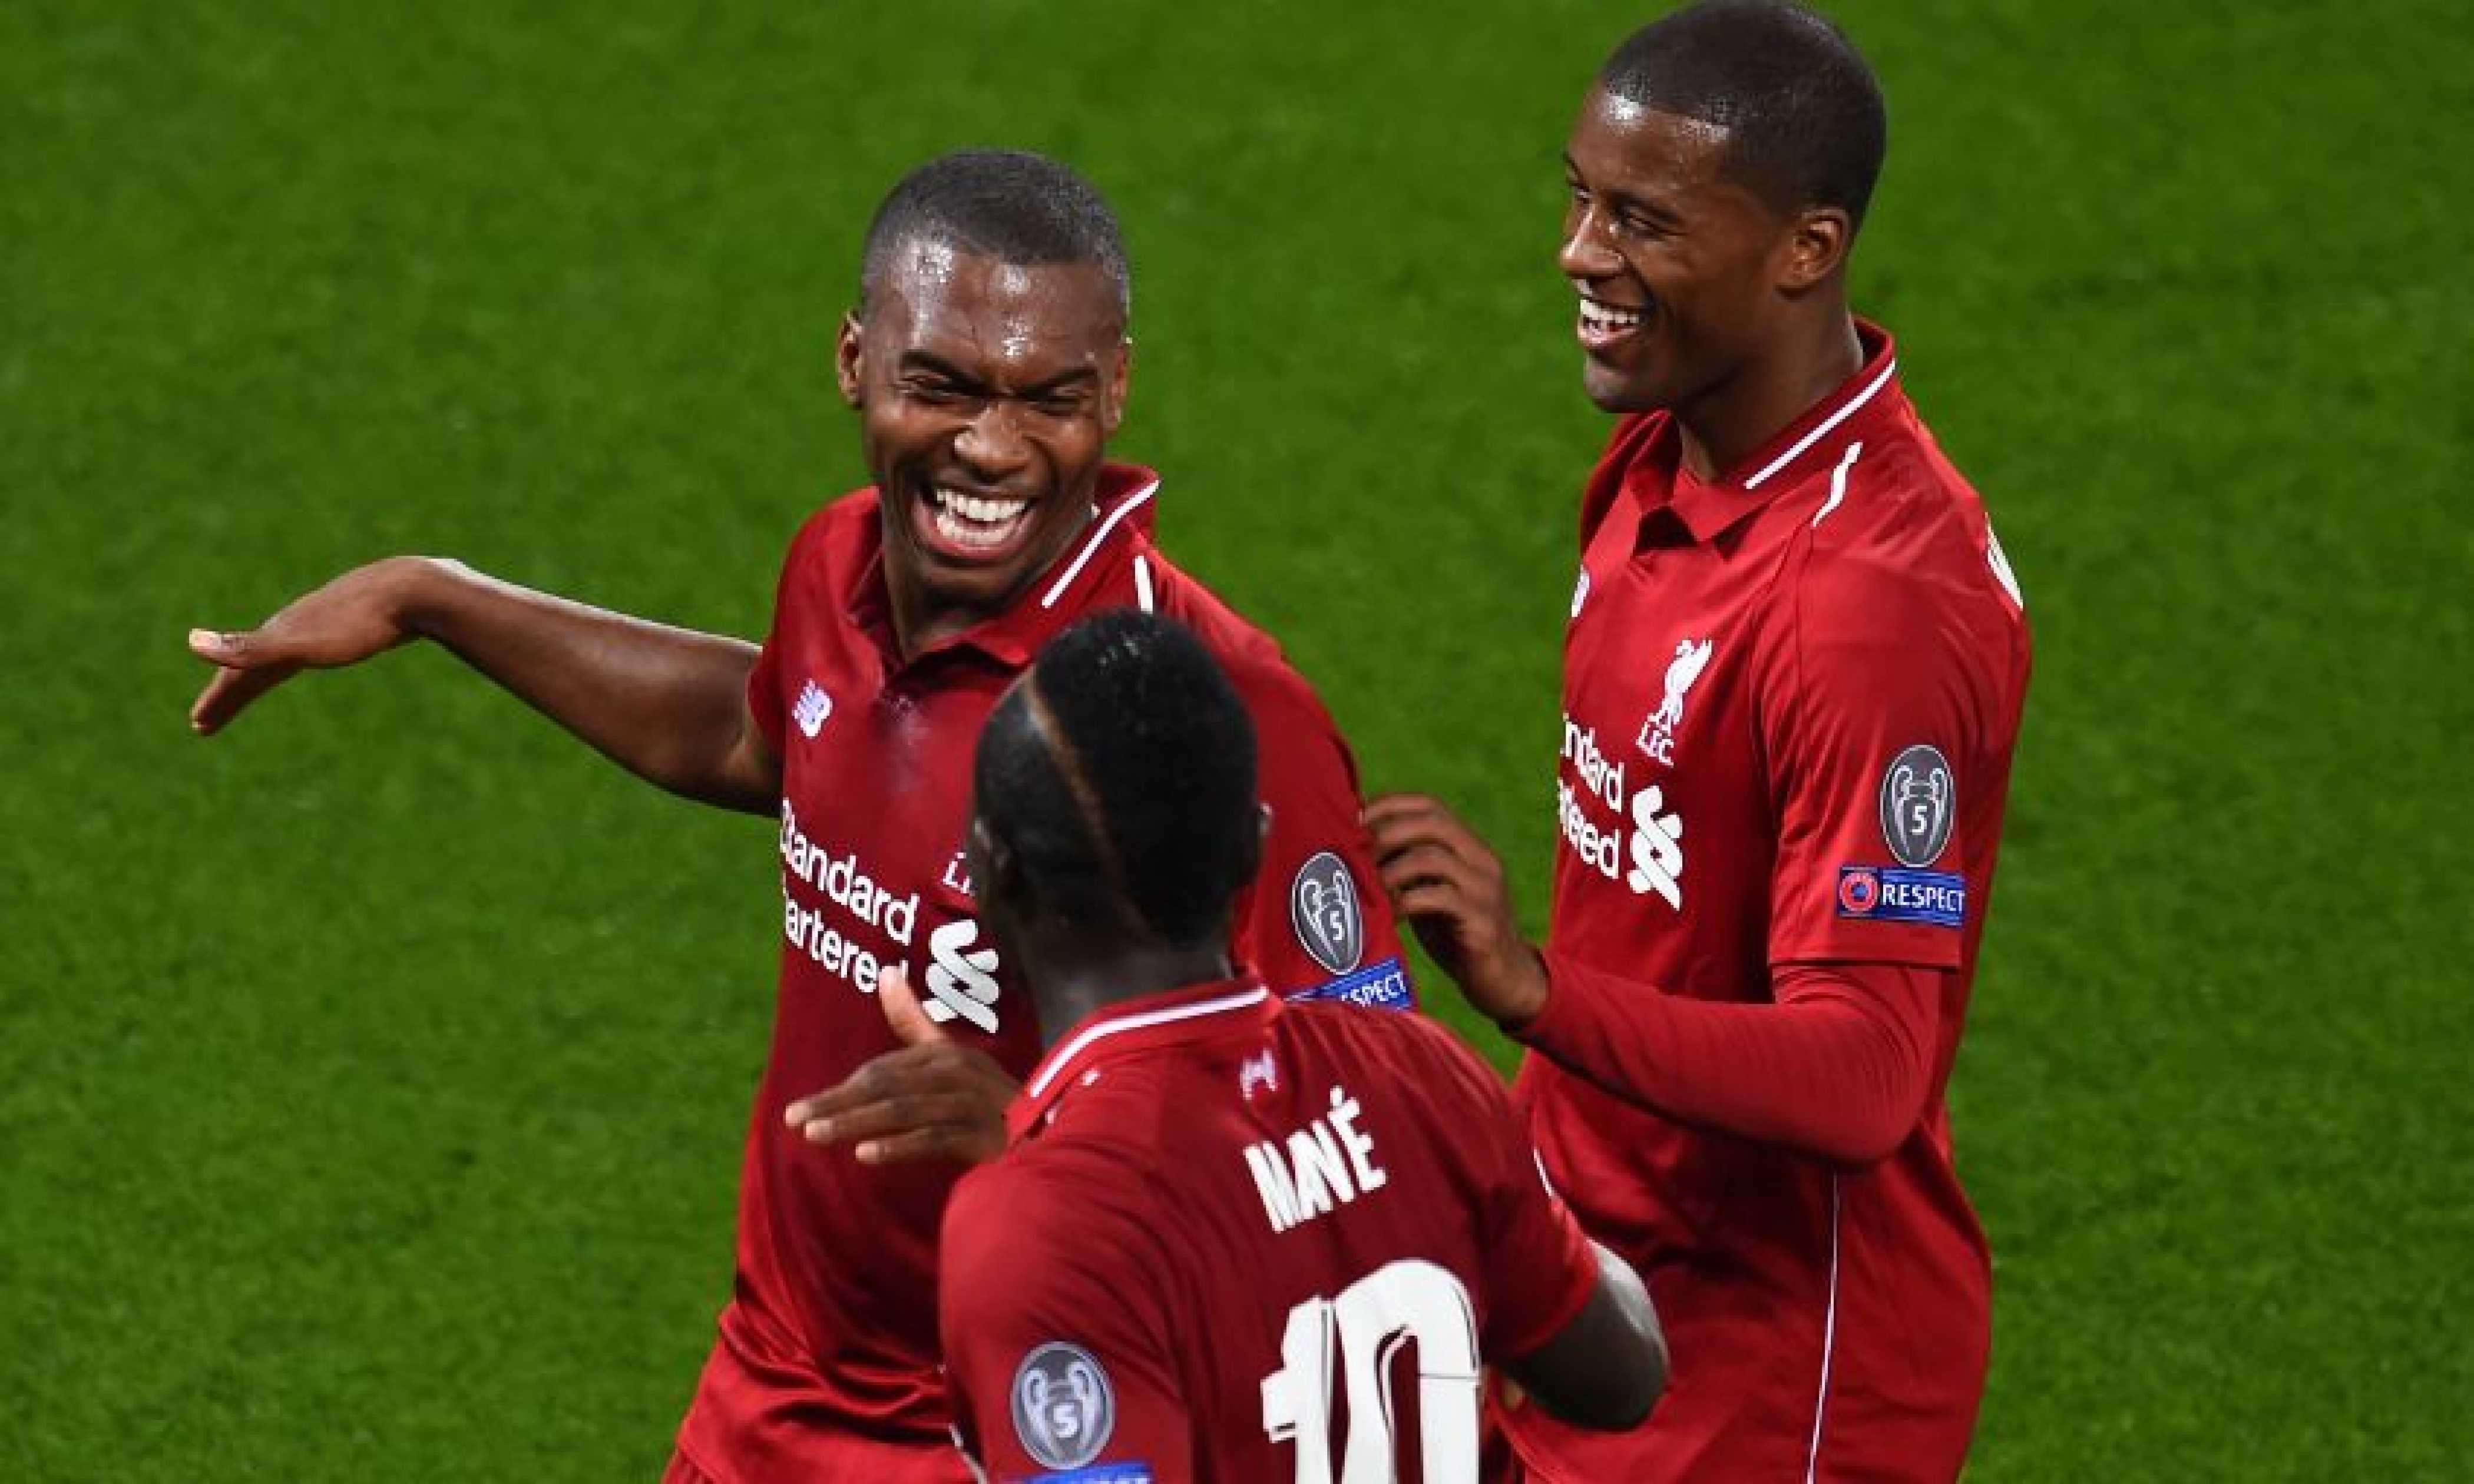 Liverpool 3-0 Southampton: Salah drought ends as Reds win streak continues